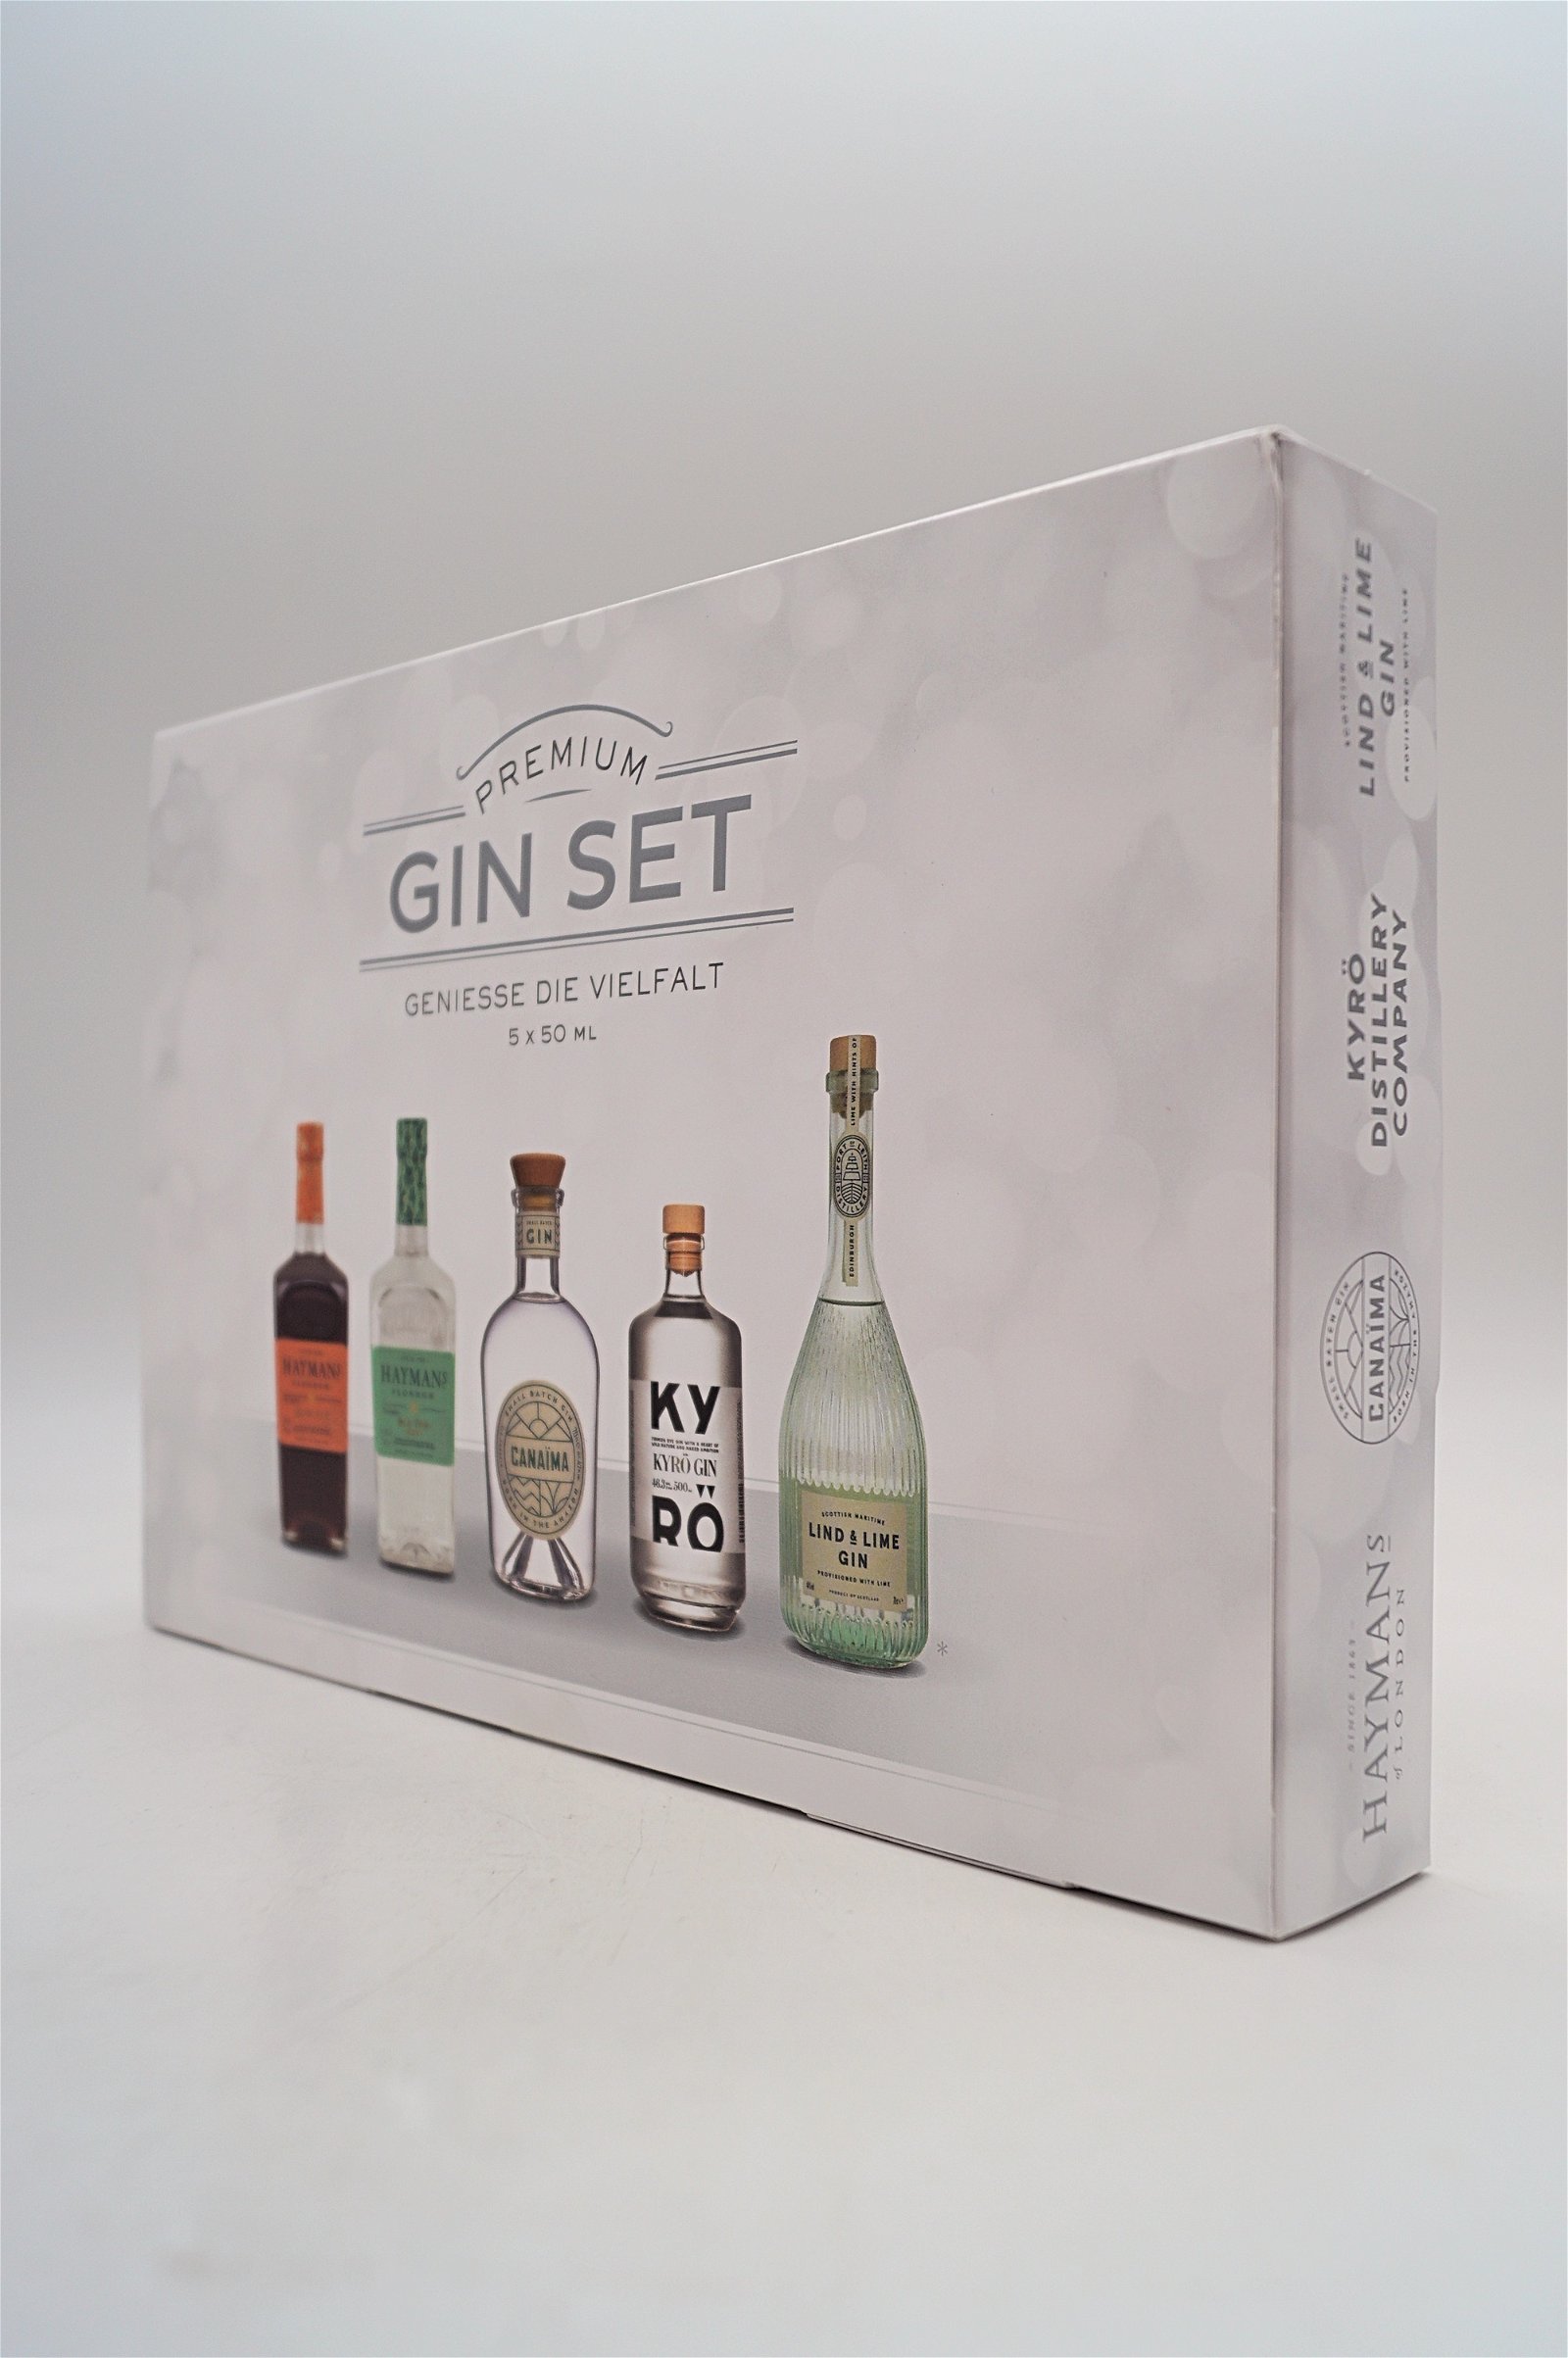 Sierra Madre Premium Gin Set 5x50ml